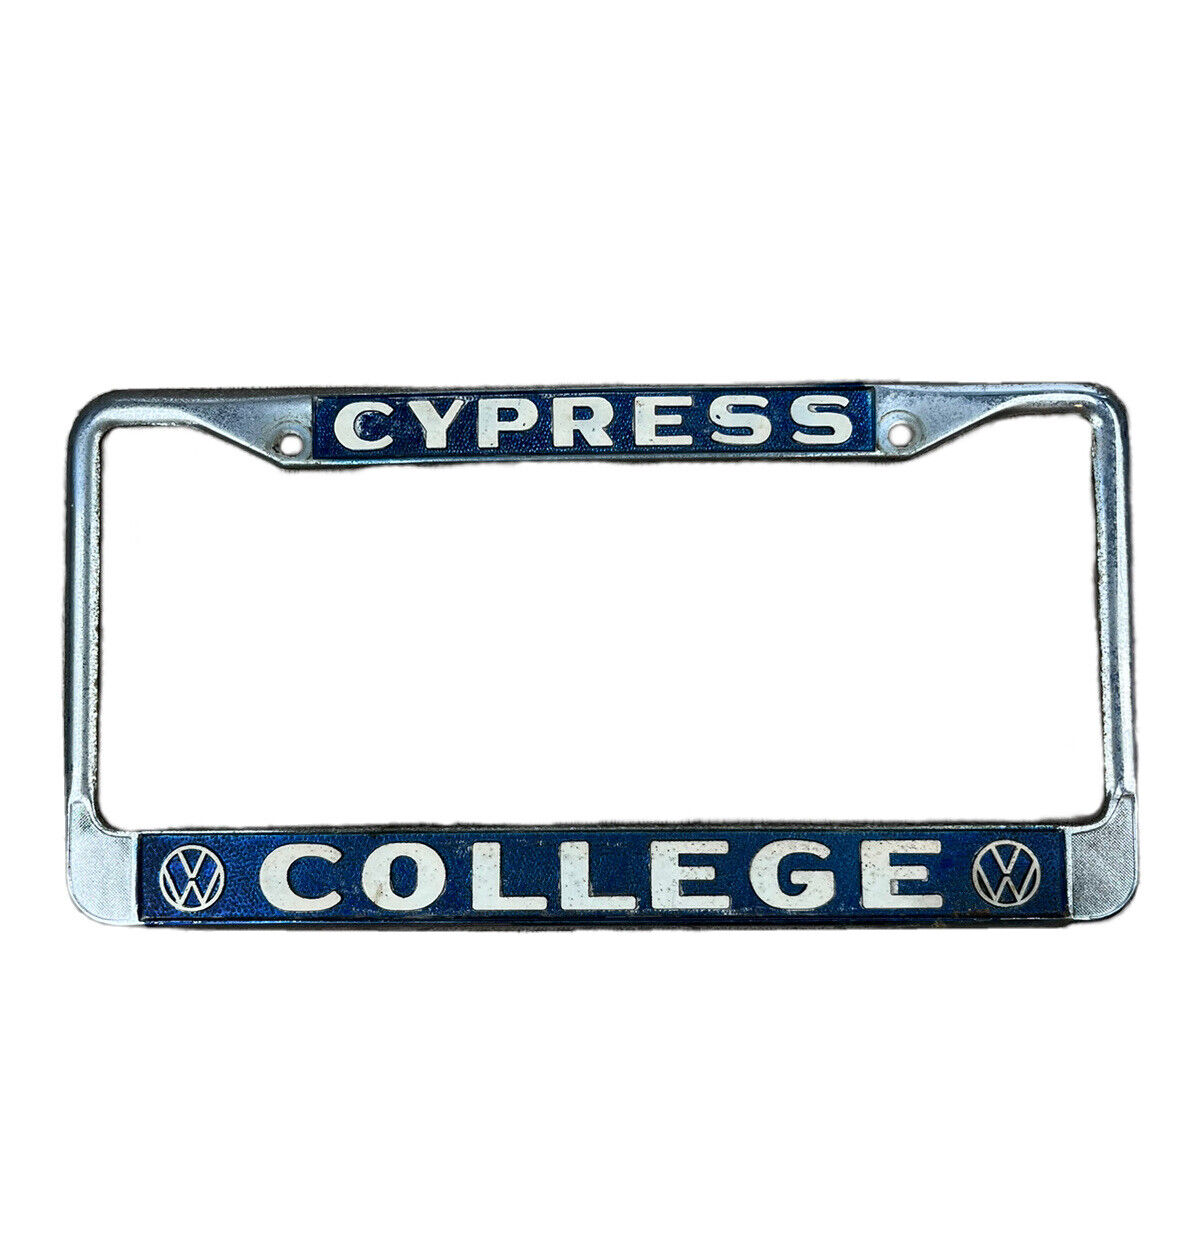 Cypress California College Volkswagen VW Vintage License Plate Frame Auto